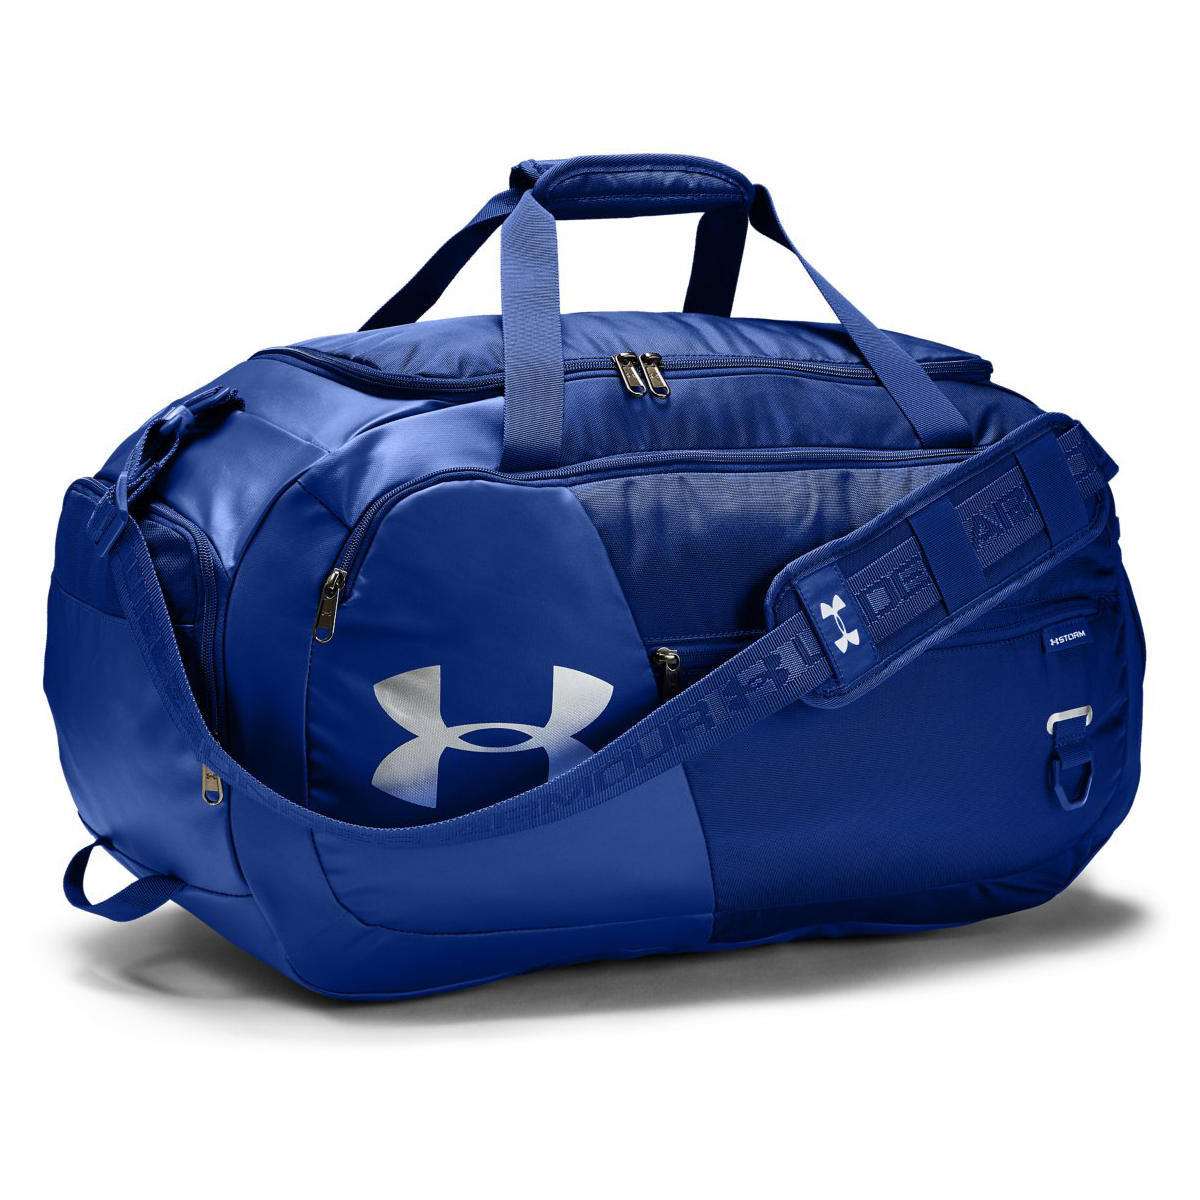 Under Armour Undeniable 4.0 Medium Duffel Bag, Blue